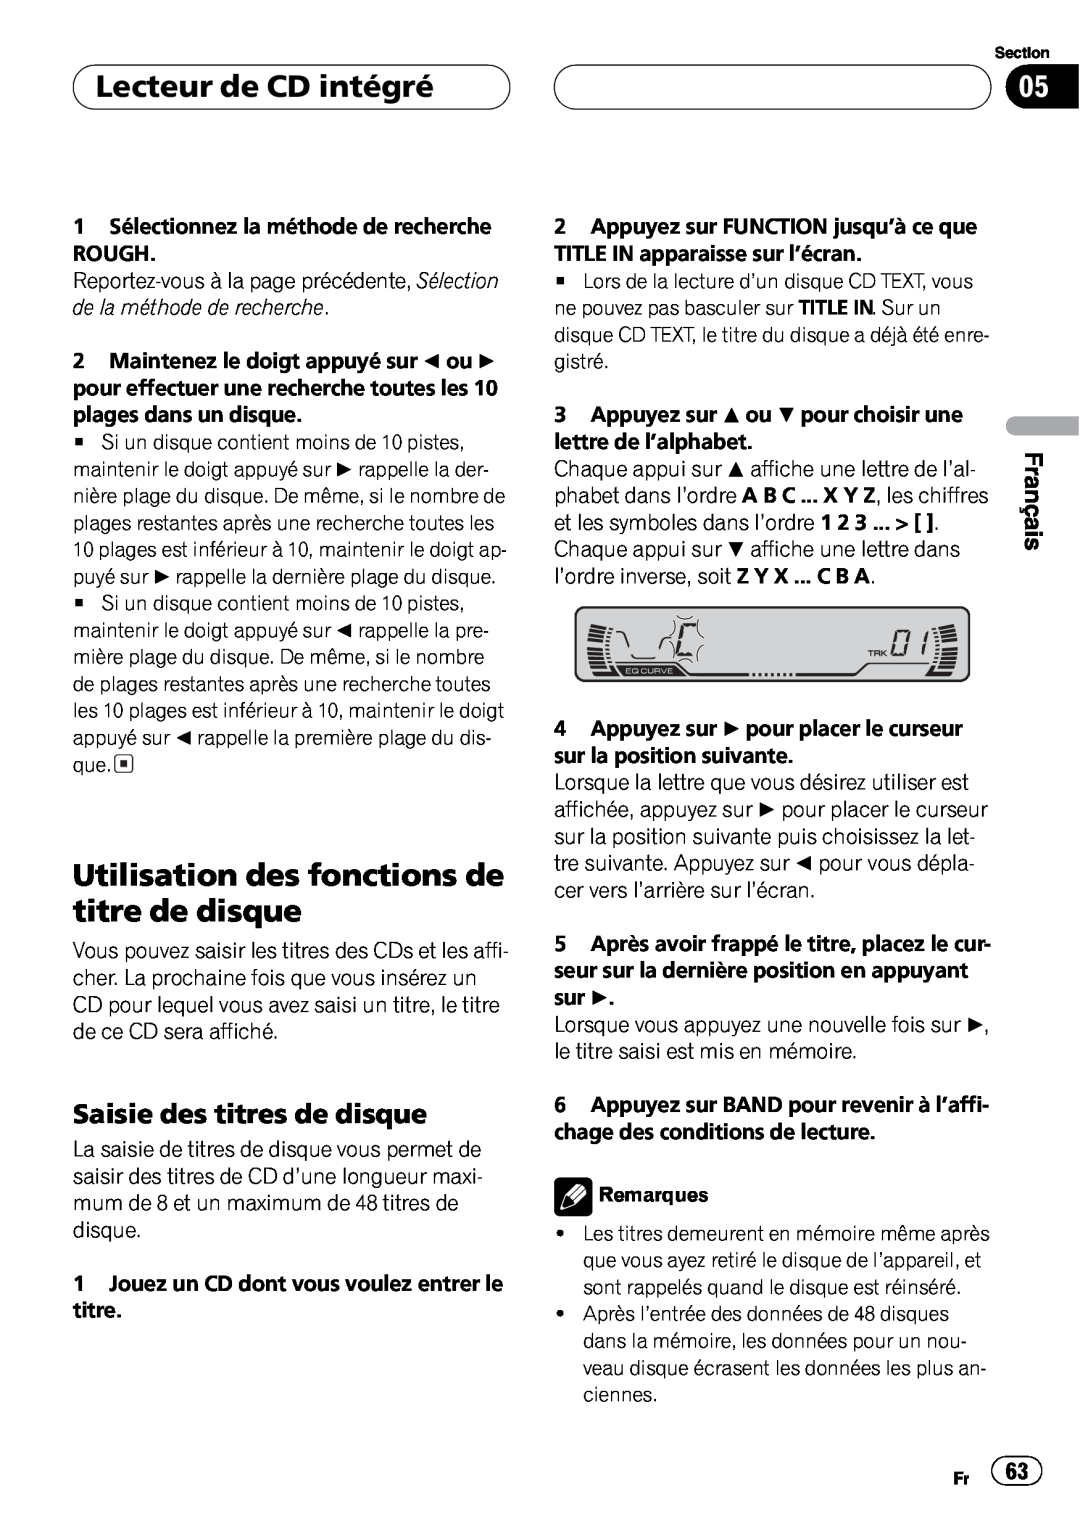 Pioneer DEH-P4600MP operation manual 